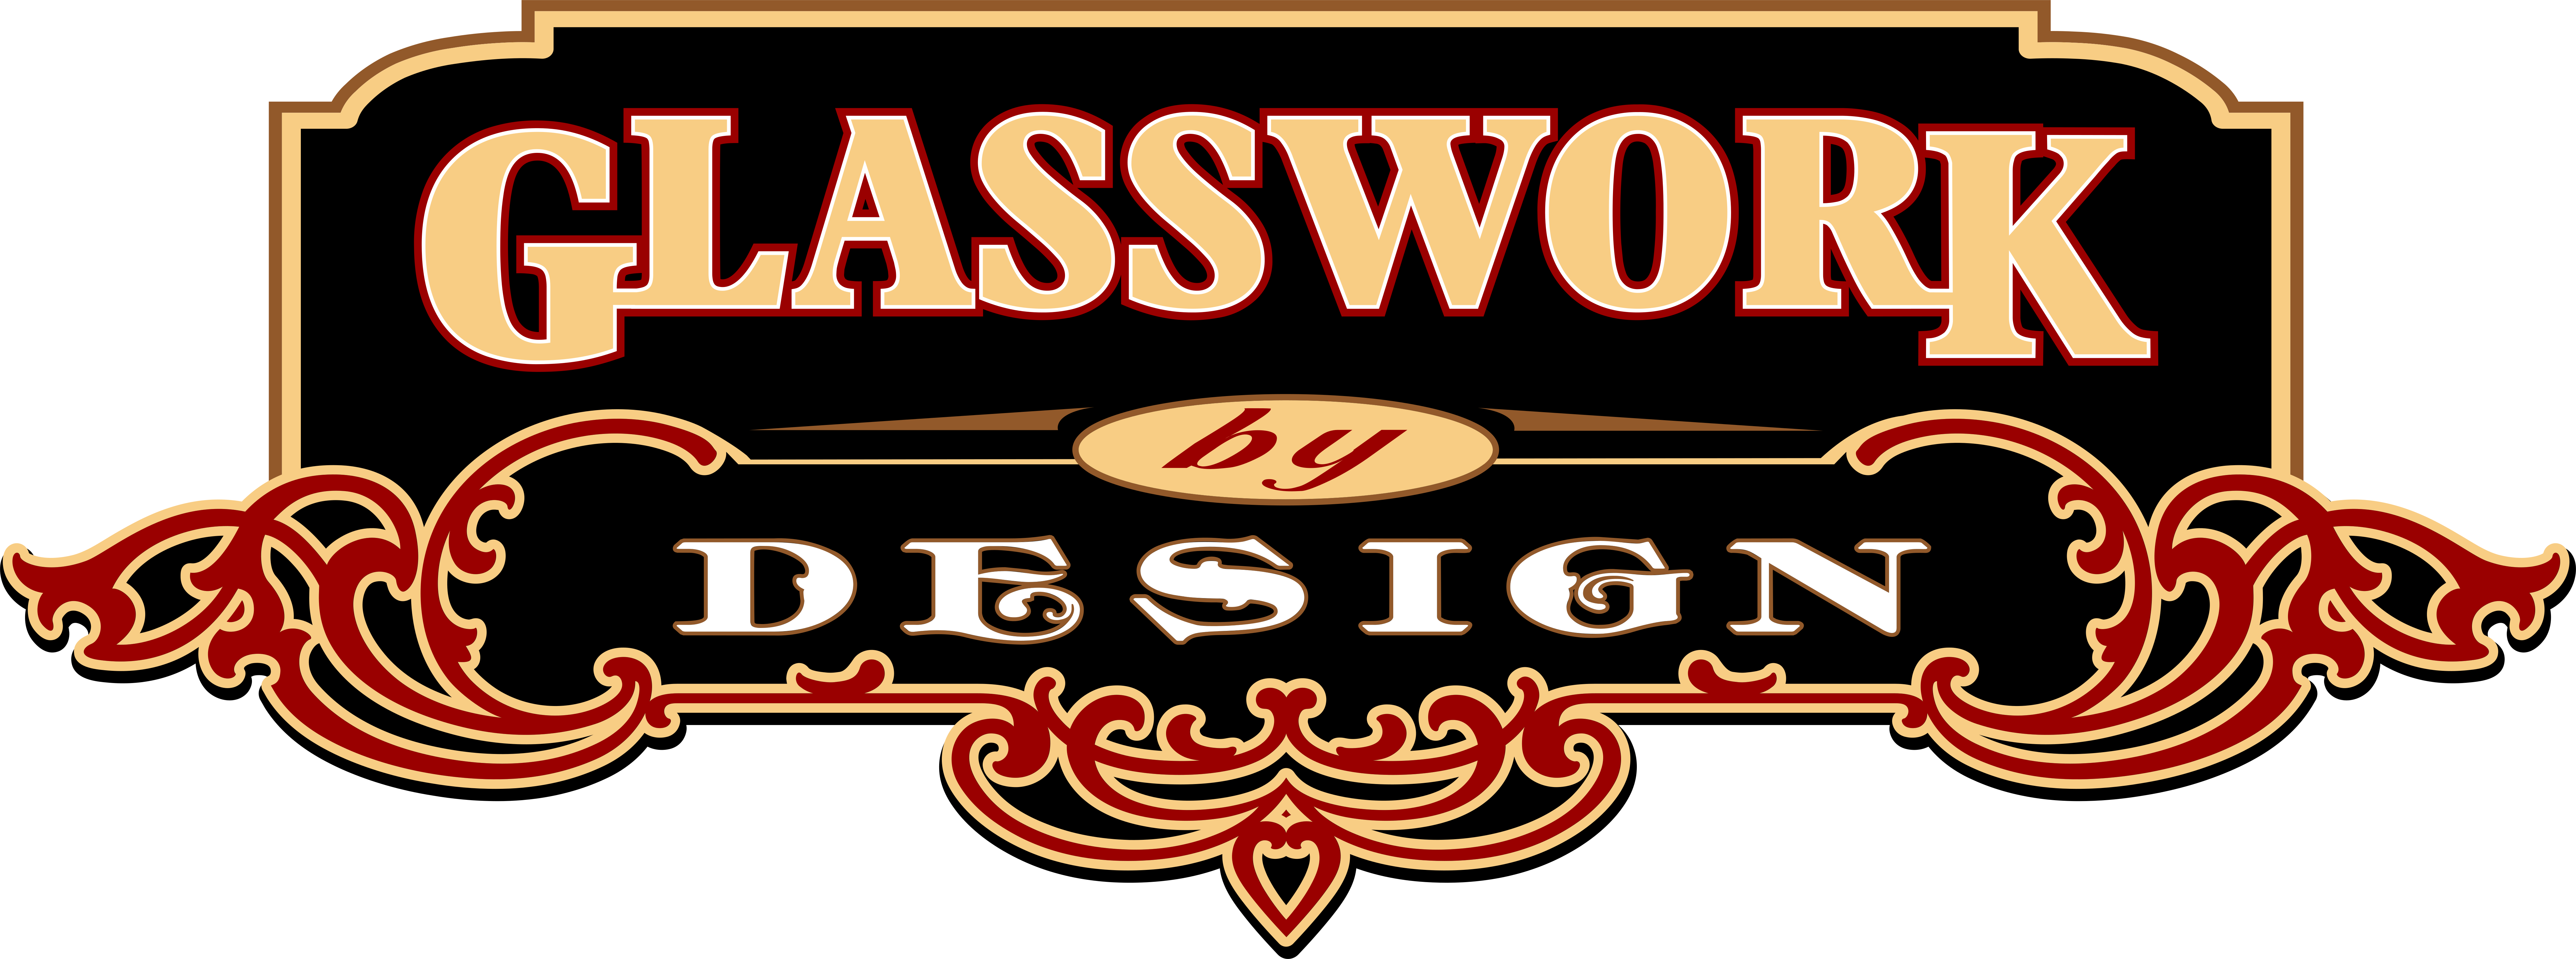 Glasswork by Design Logo